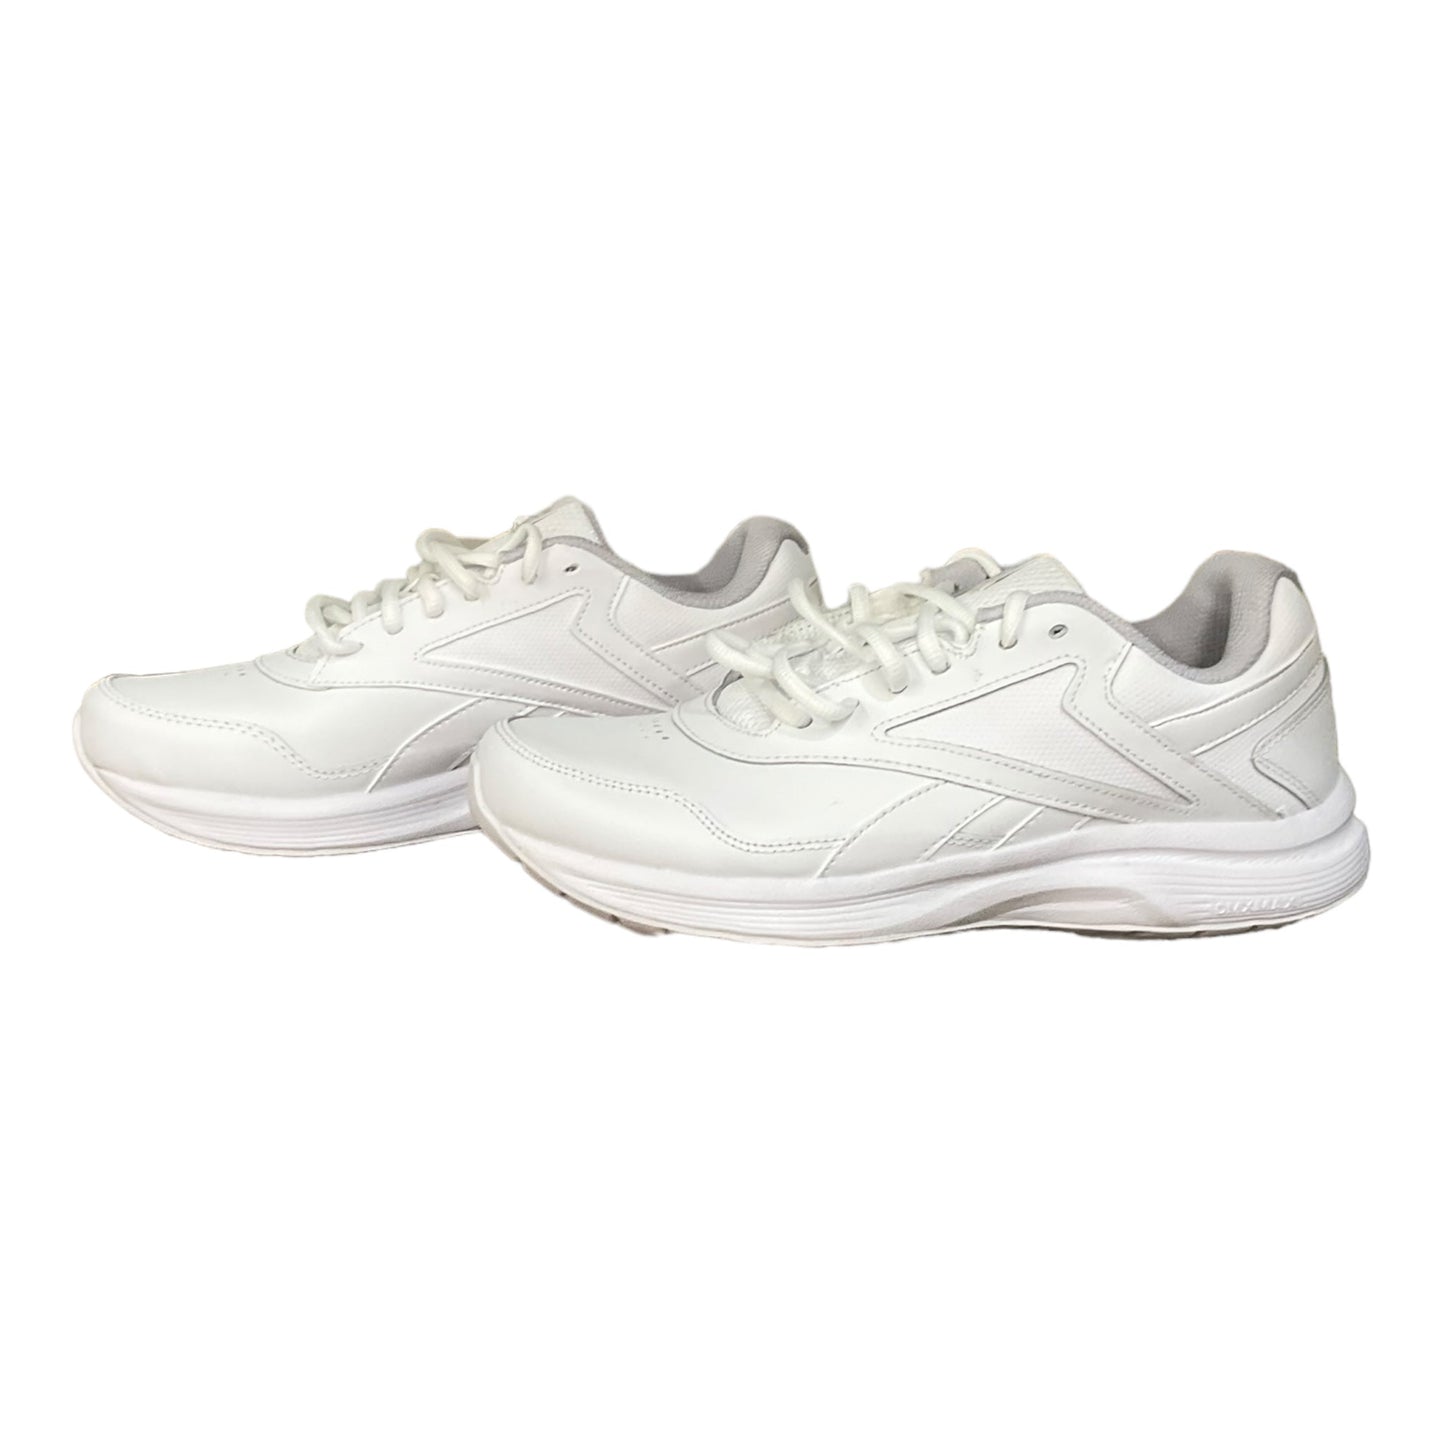 Grey & White Shoes Athletic Reebok, Size 9.5